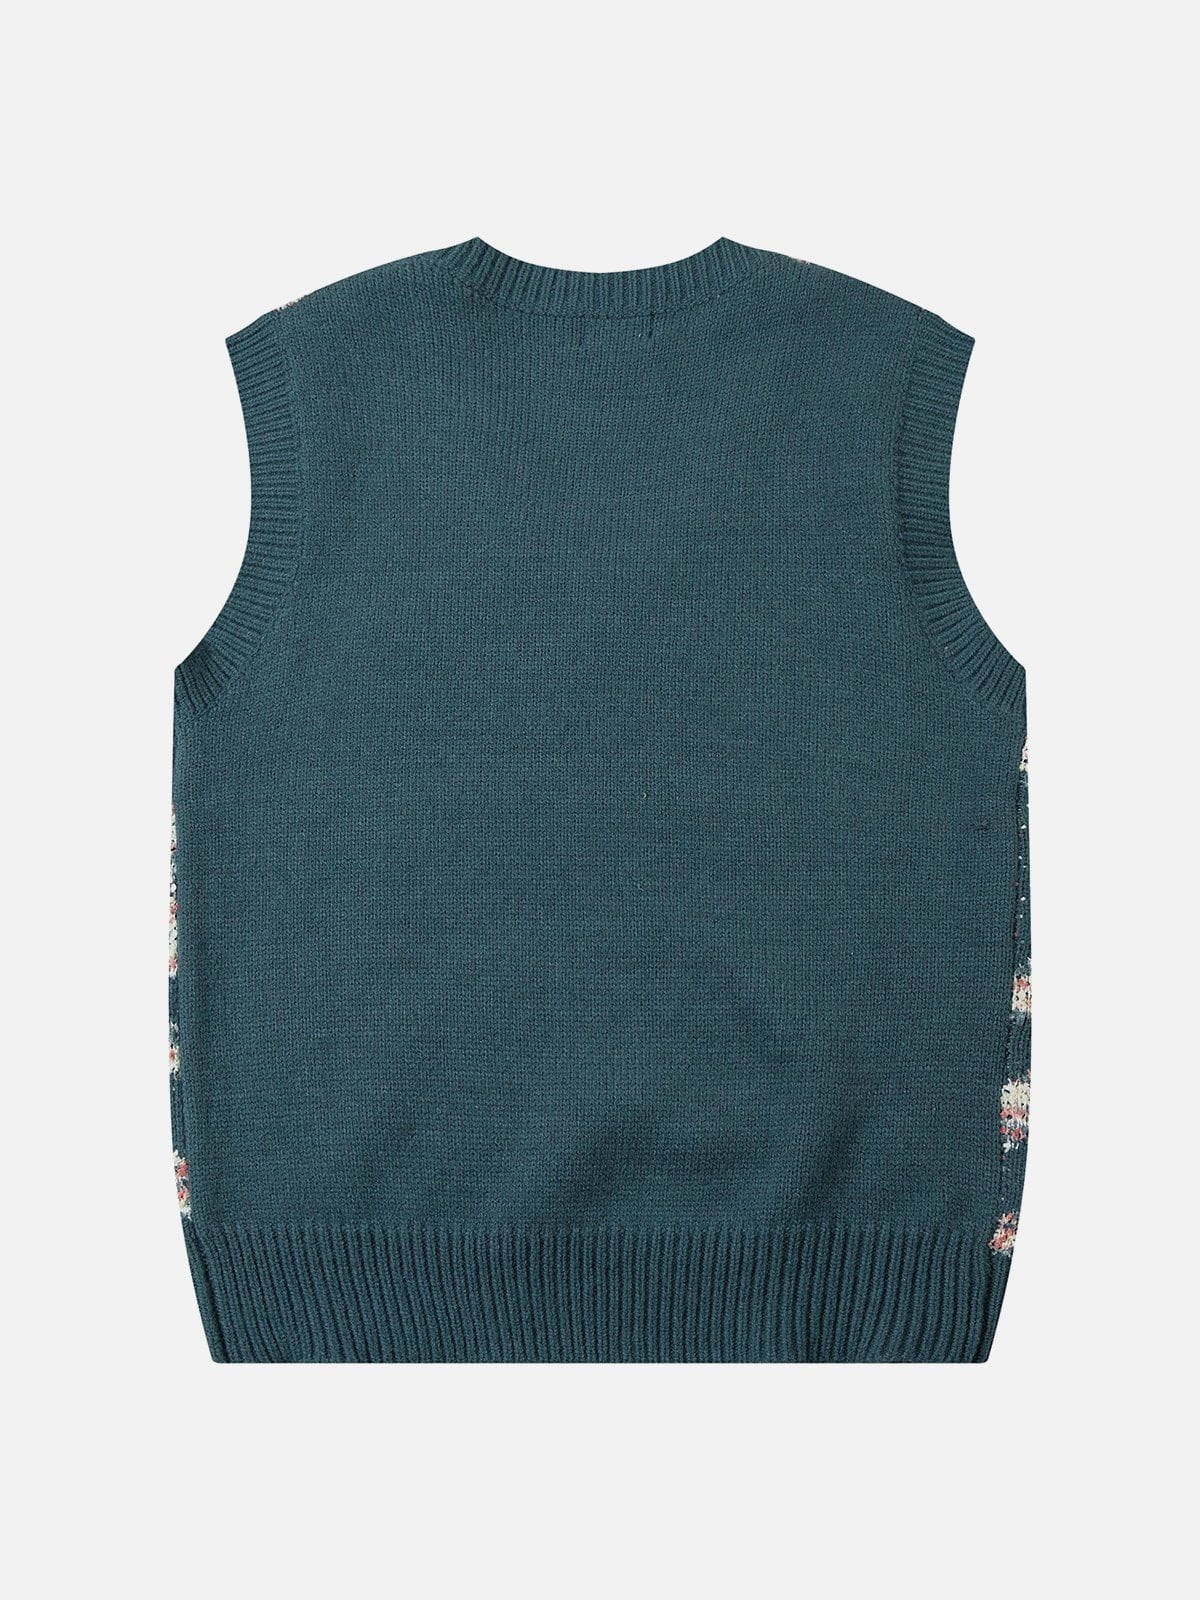 Aelfric Eden Varicolored Star Sweater Vest